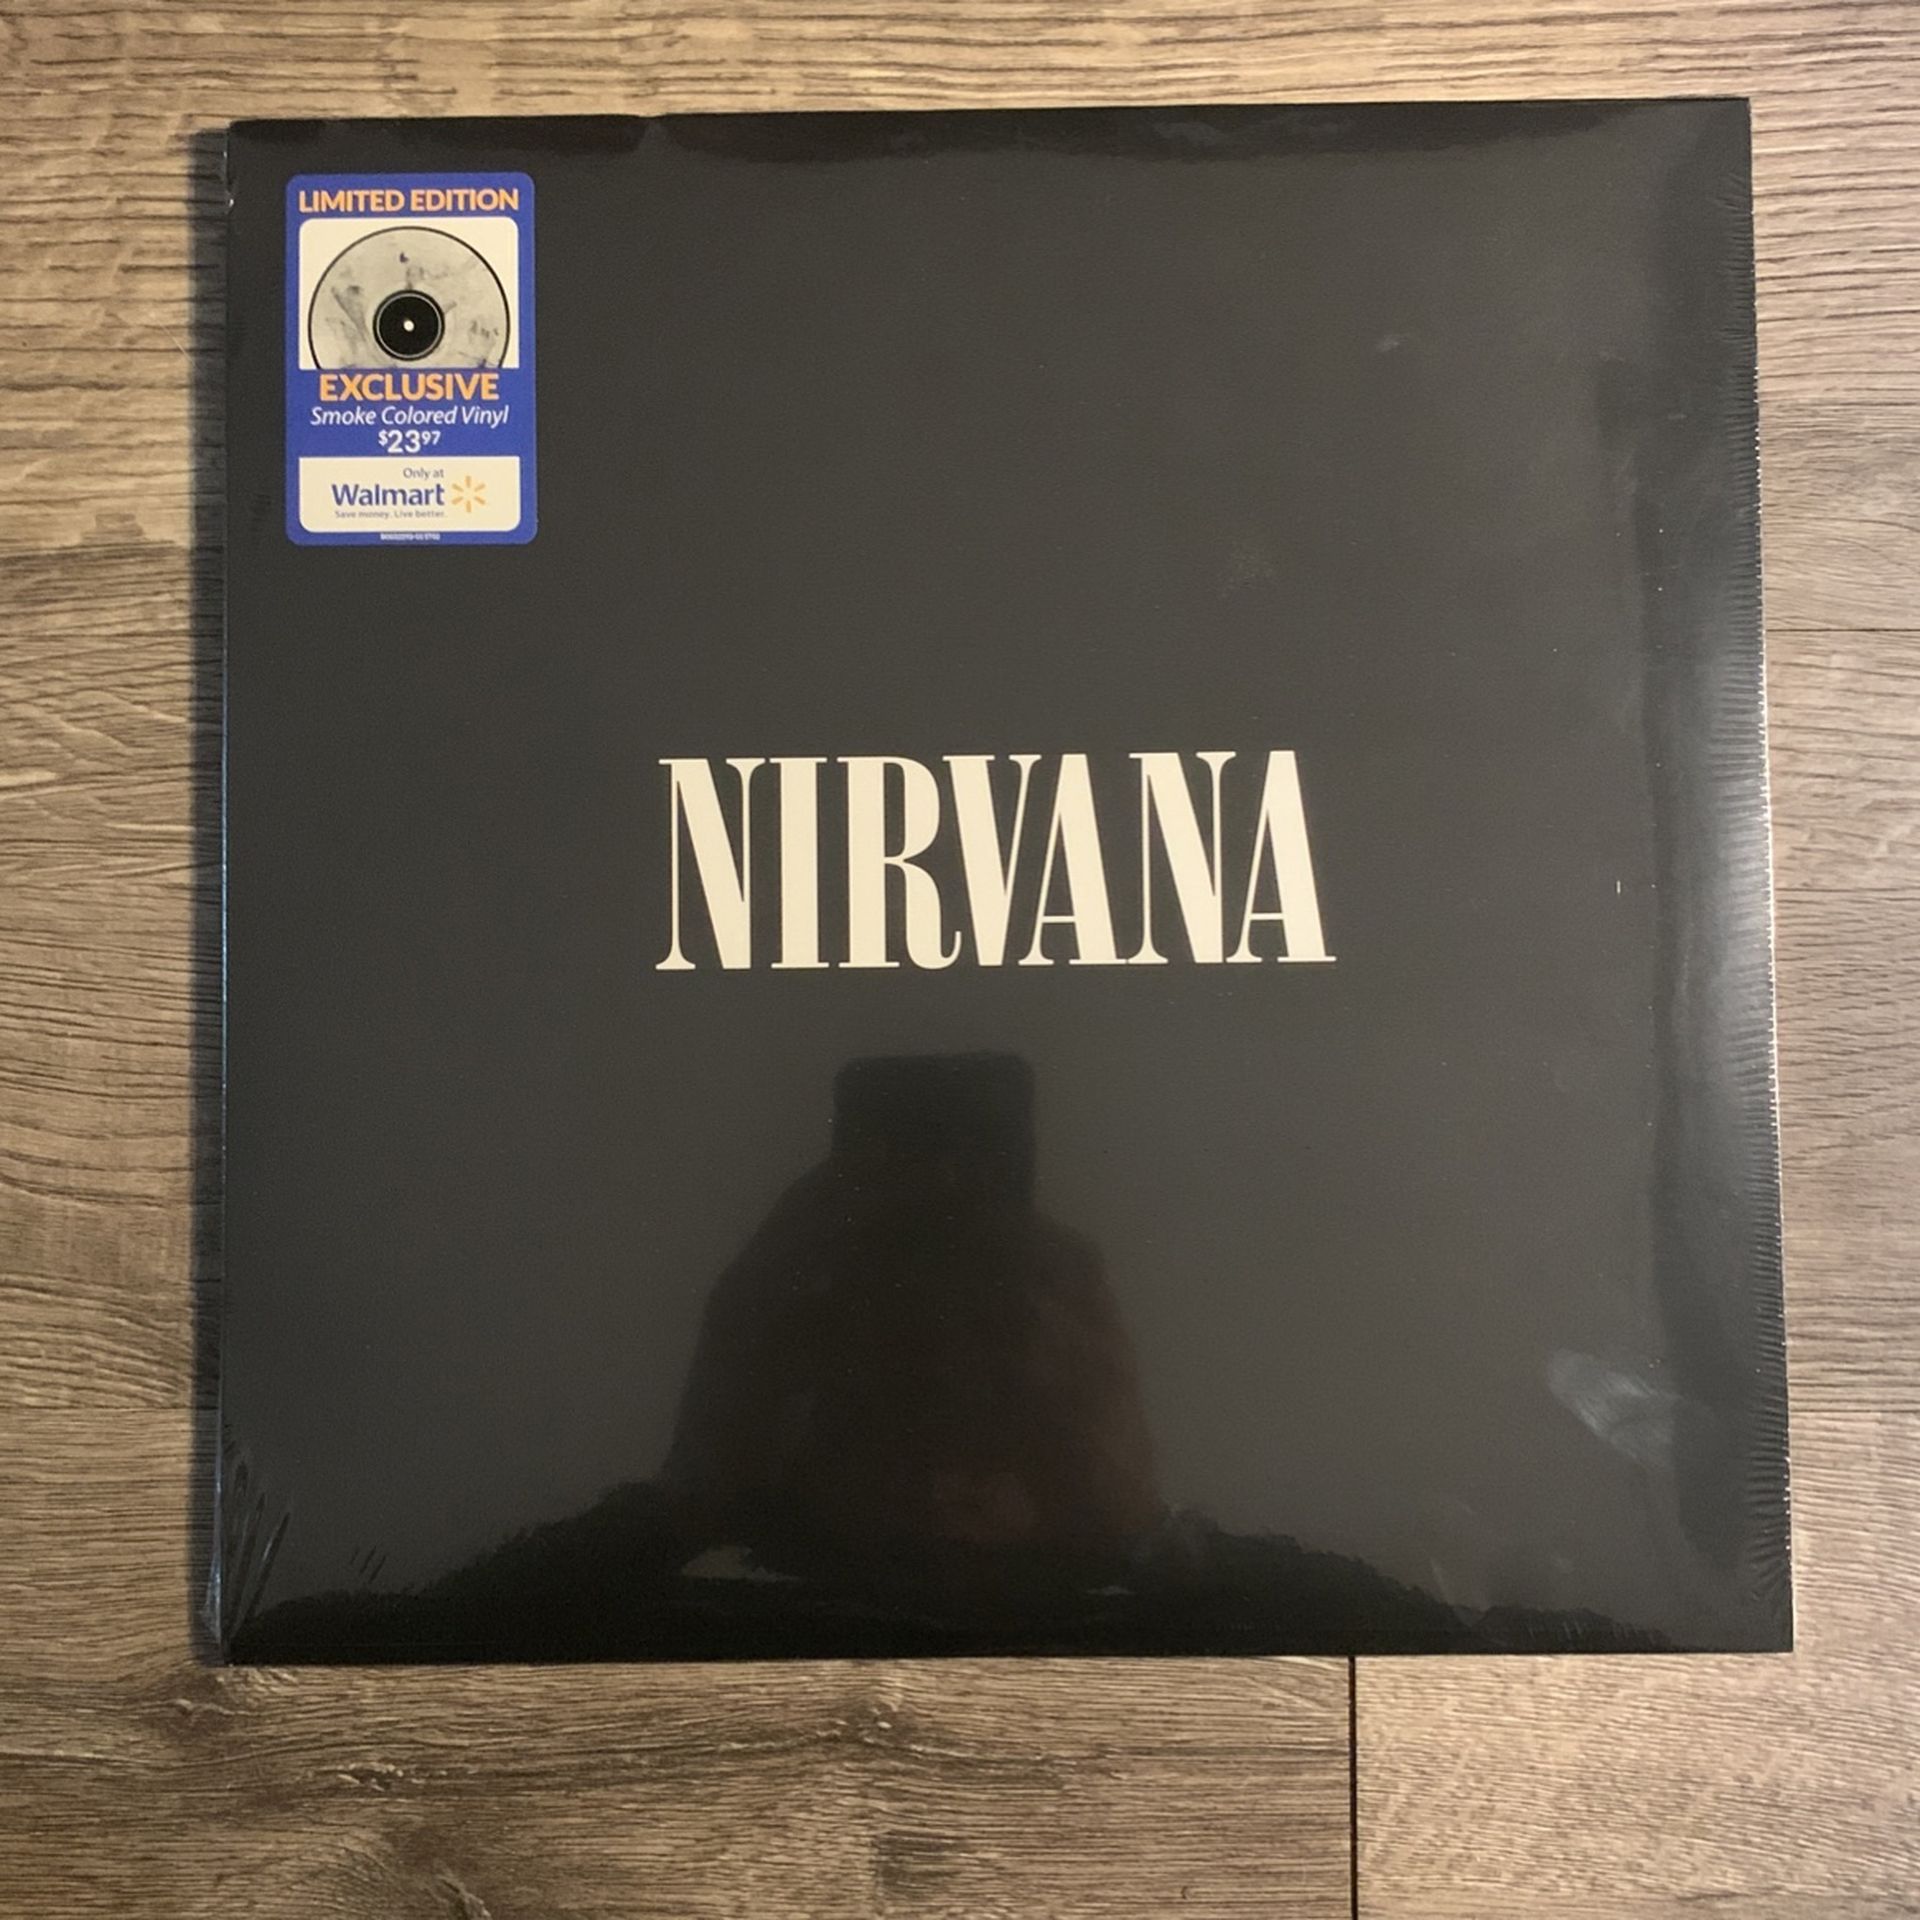 Nirvana New Smoked Color Vinyl